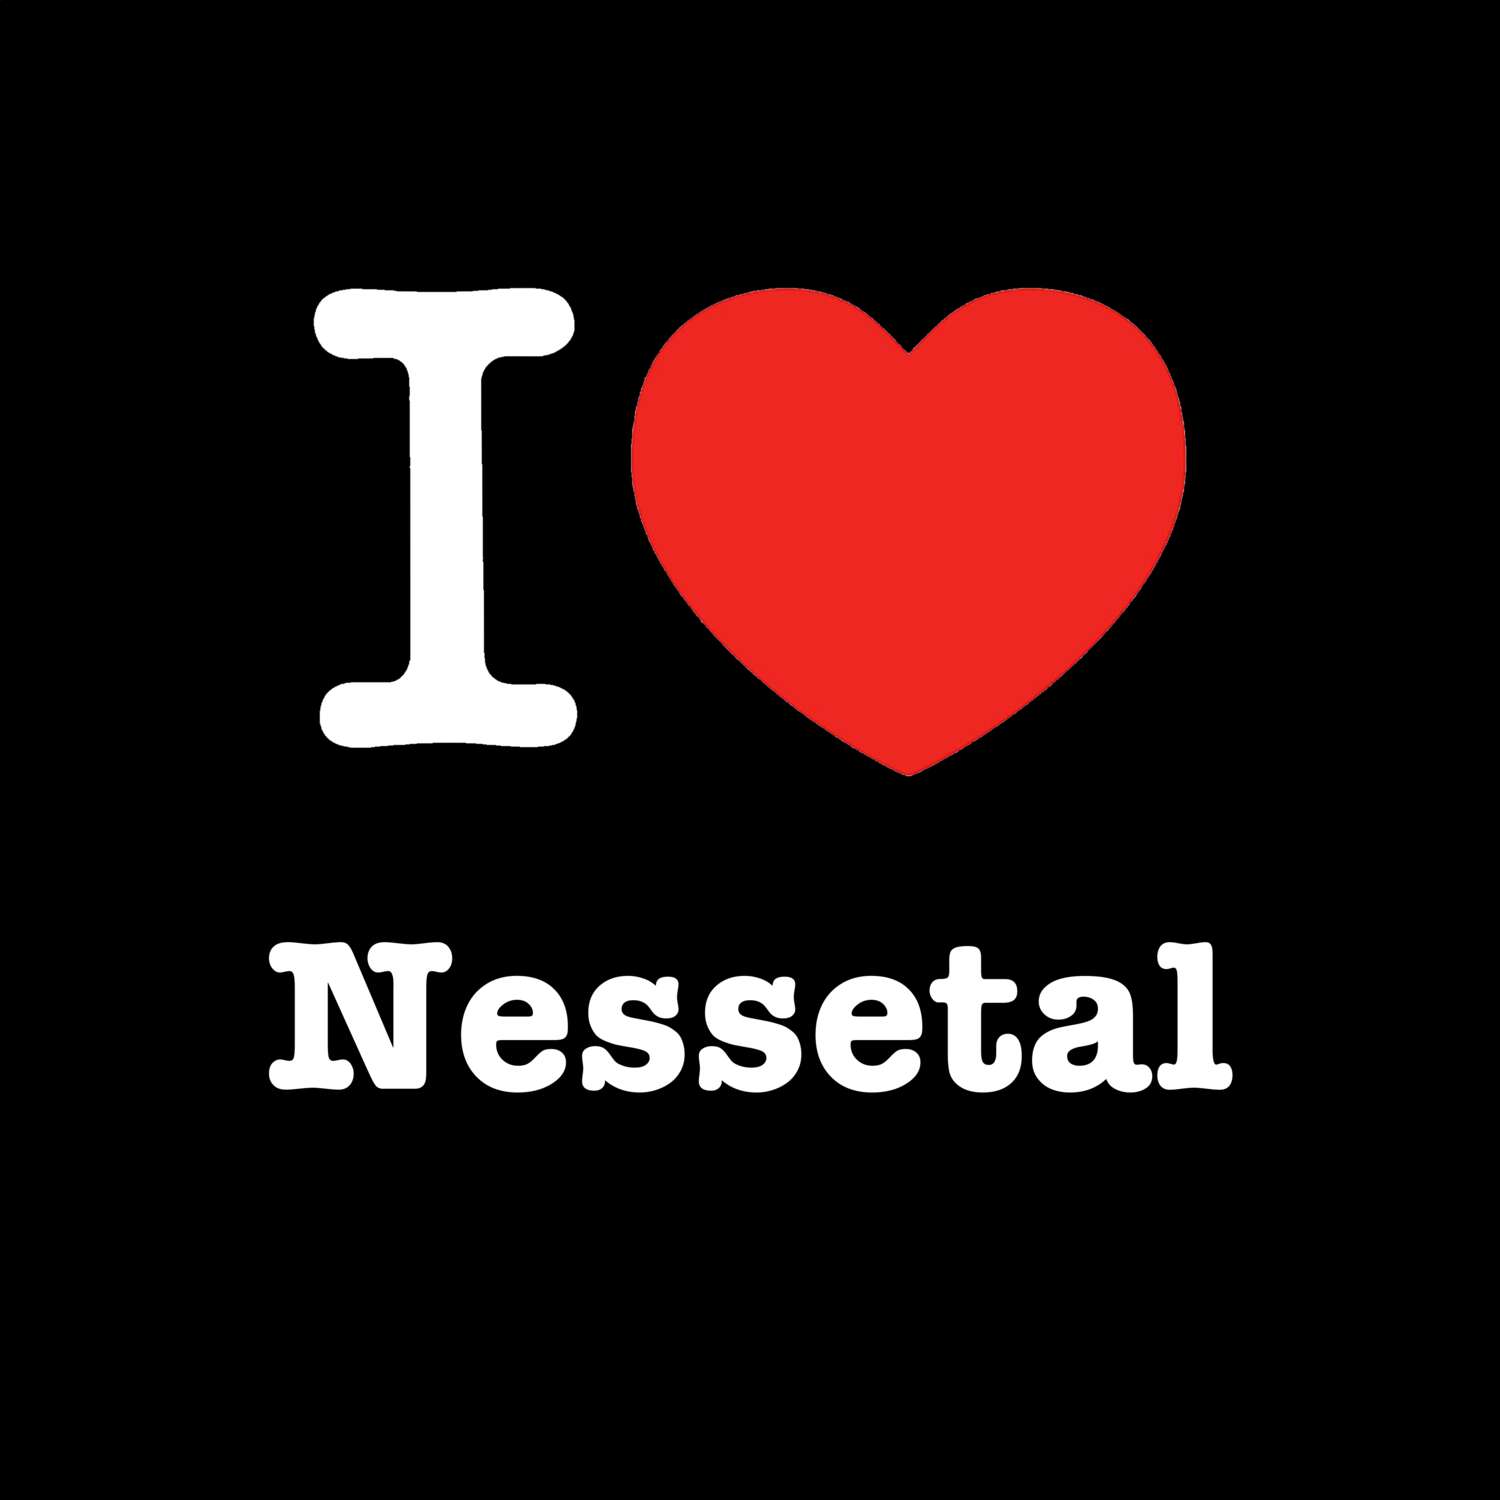 Nessetal T-Shirt »I love«